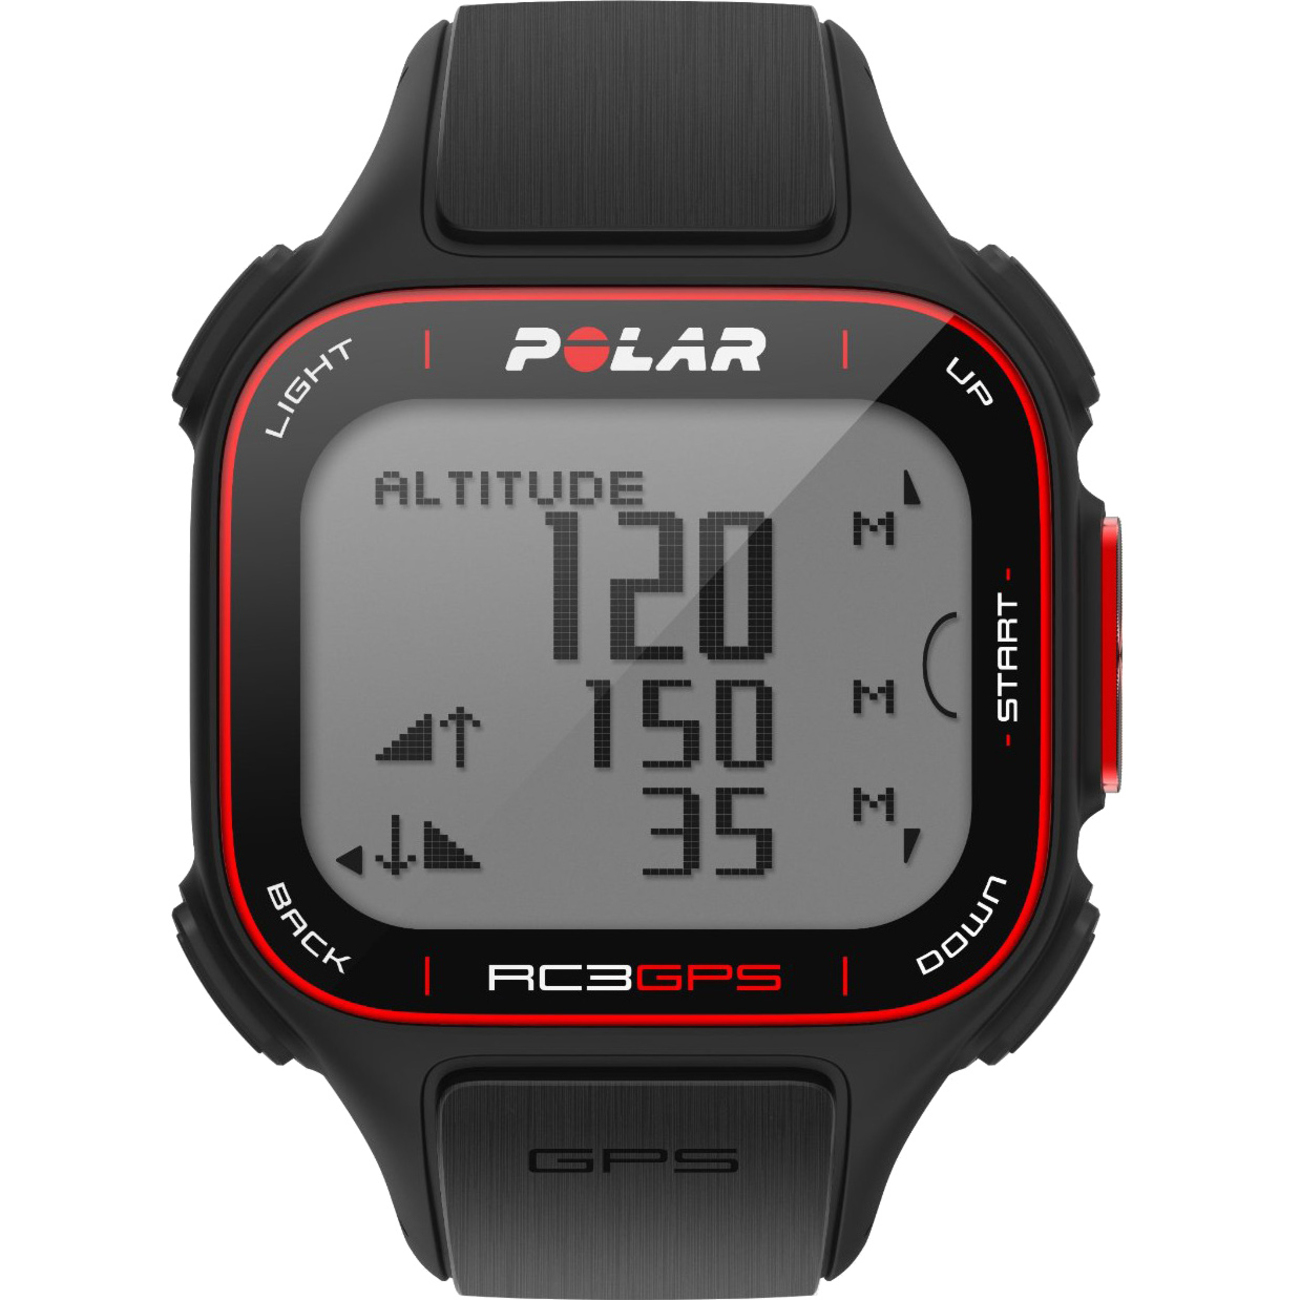 Polar RC3 w/ GPS Includes Altitude Feature